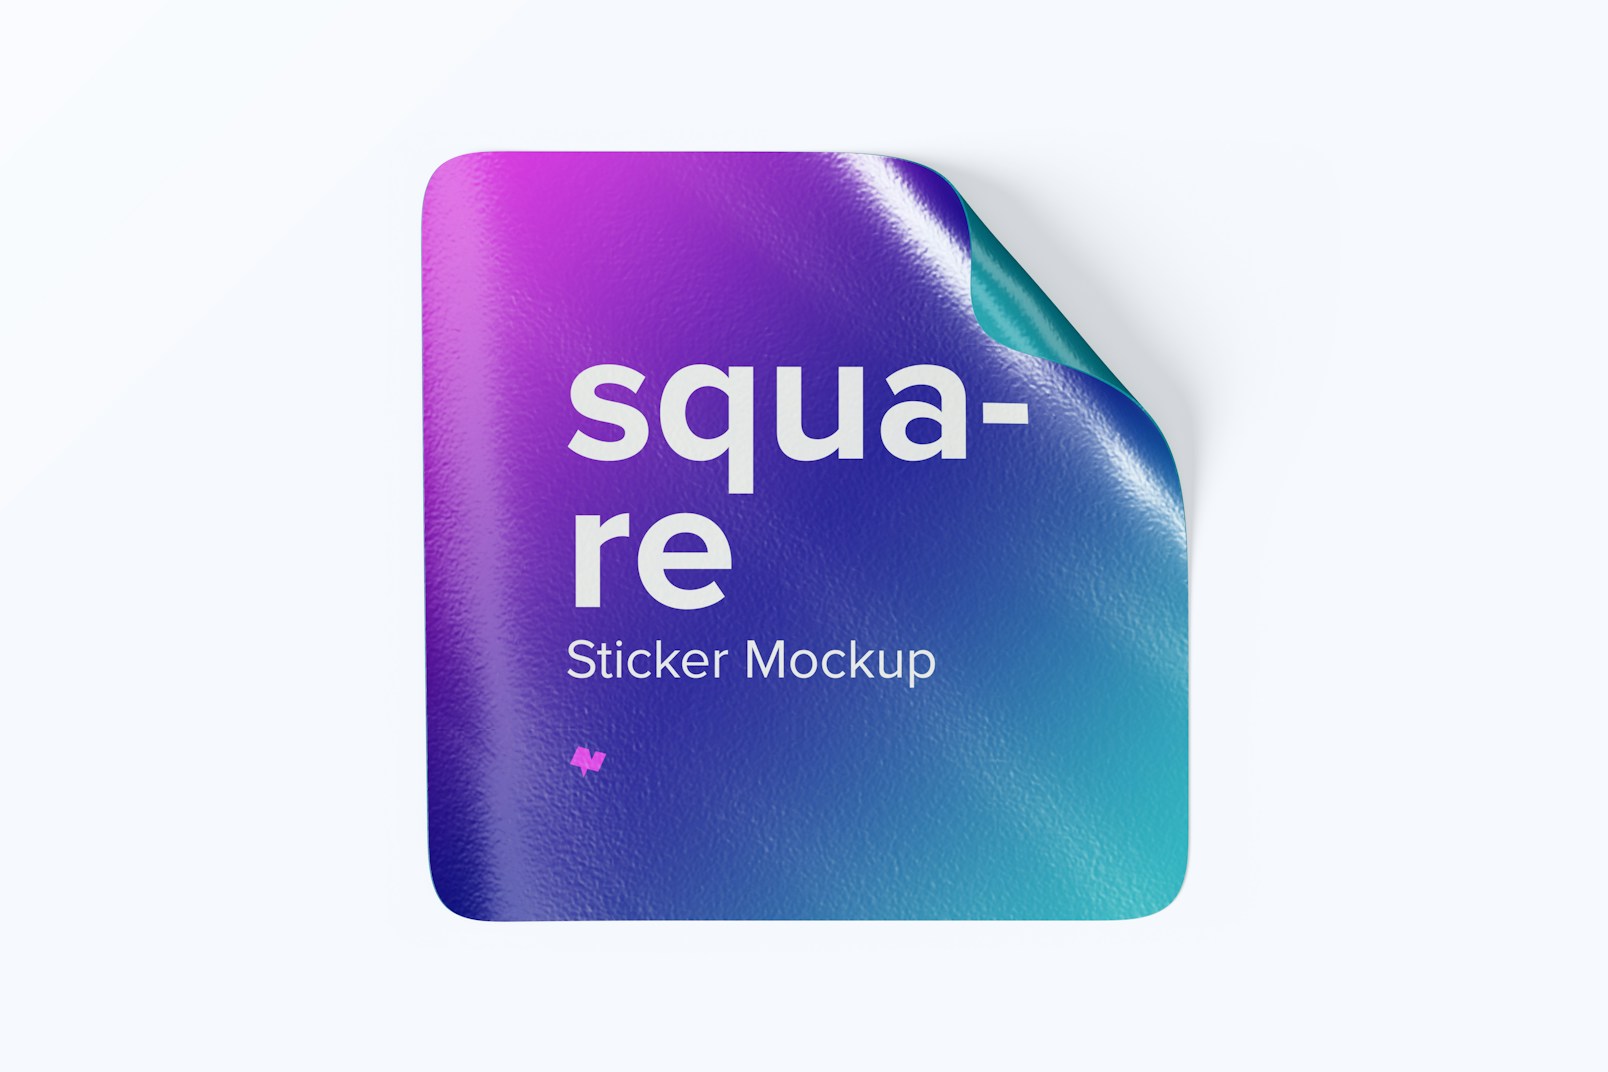 Square Sticker Mockup, Top View